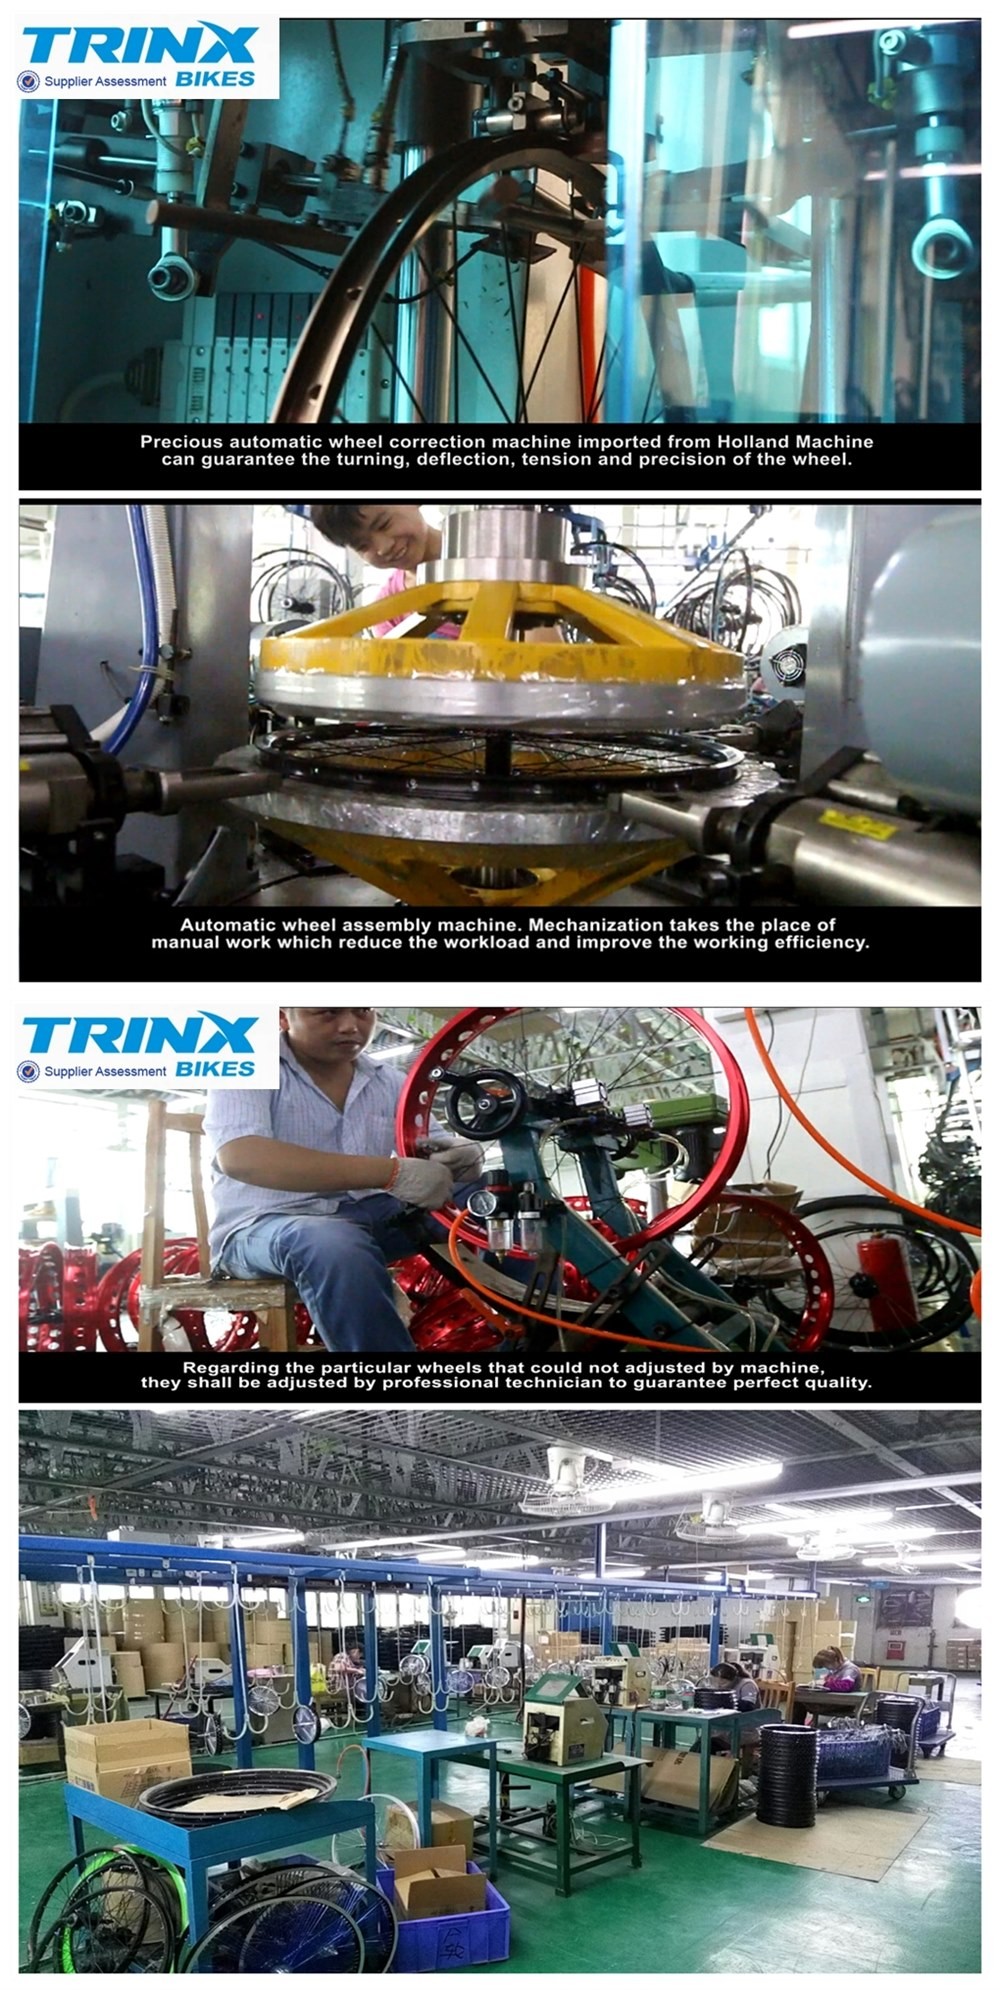 Trinx 27.5er 2016マウンテンバイク自転車アルミフレーム用販売仕入れ・メーカー・工場